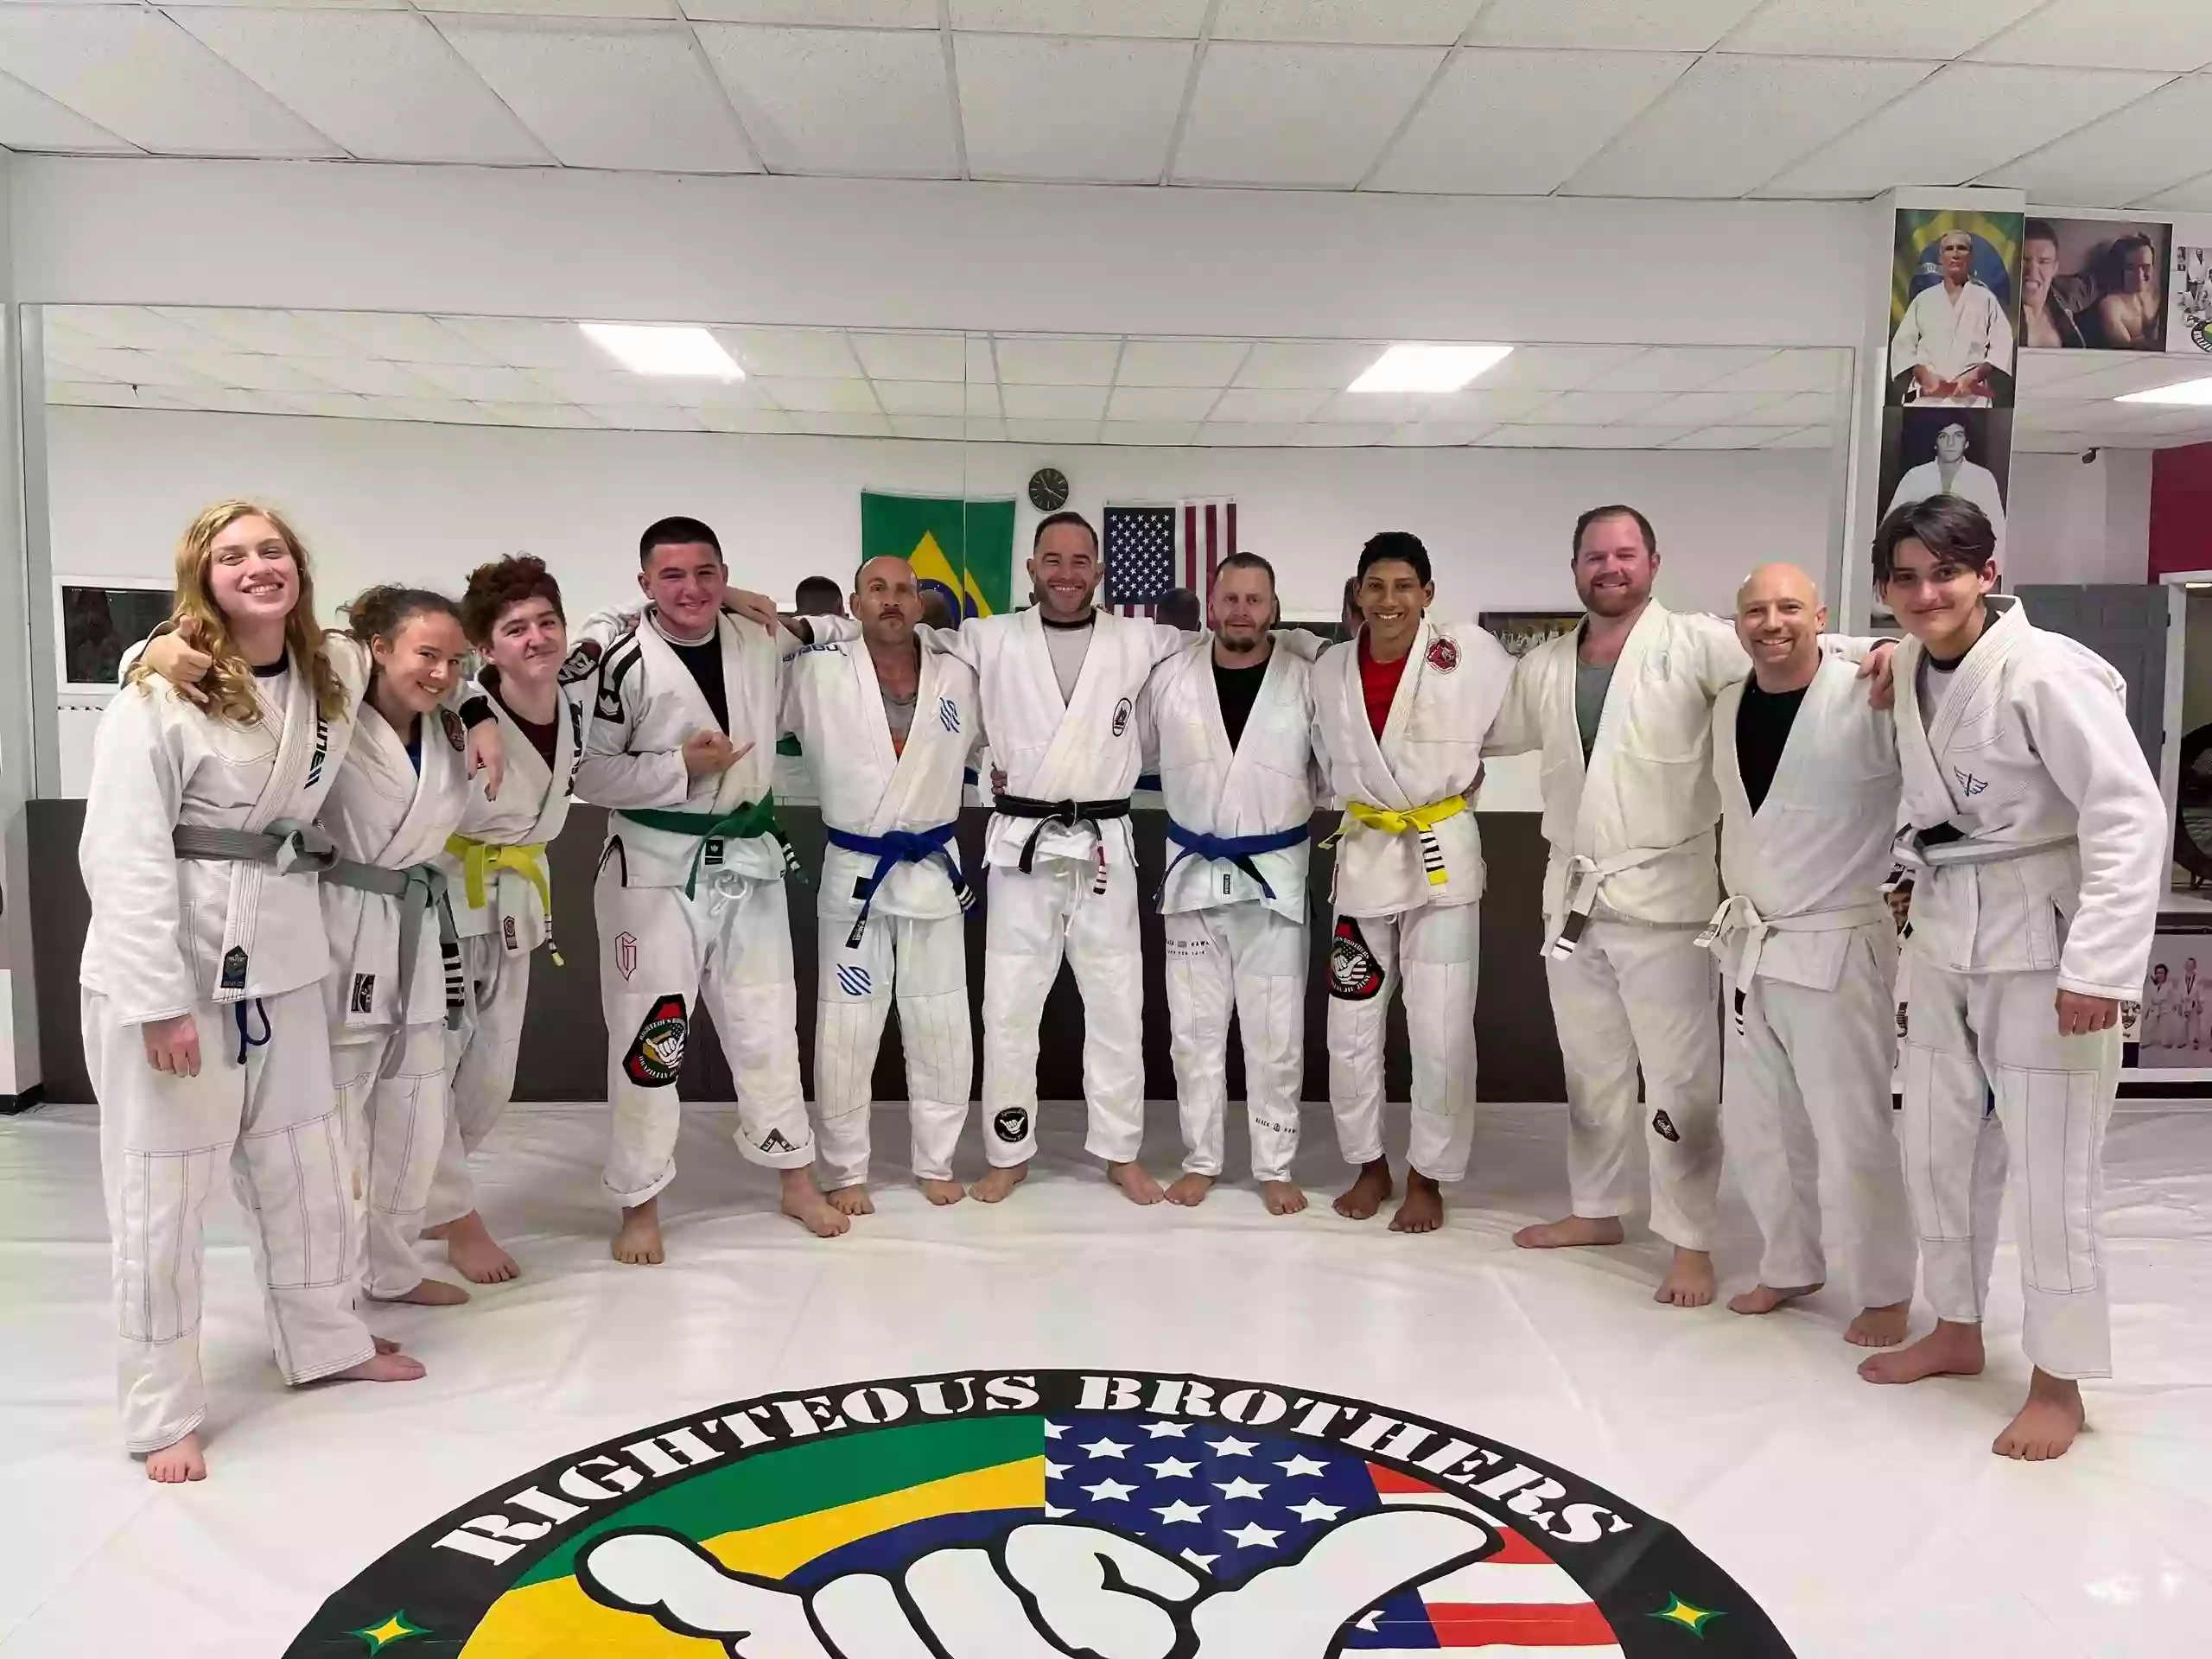 Righteous Brothers Brazilian Jiu Jitsu